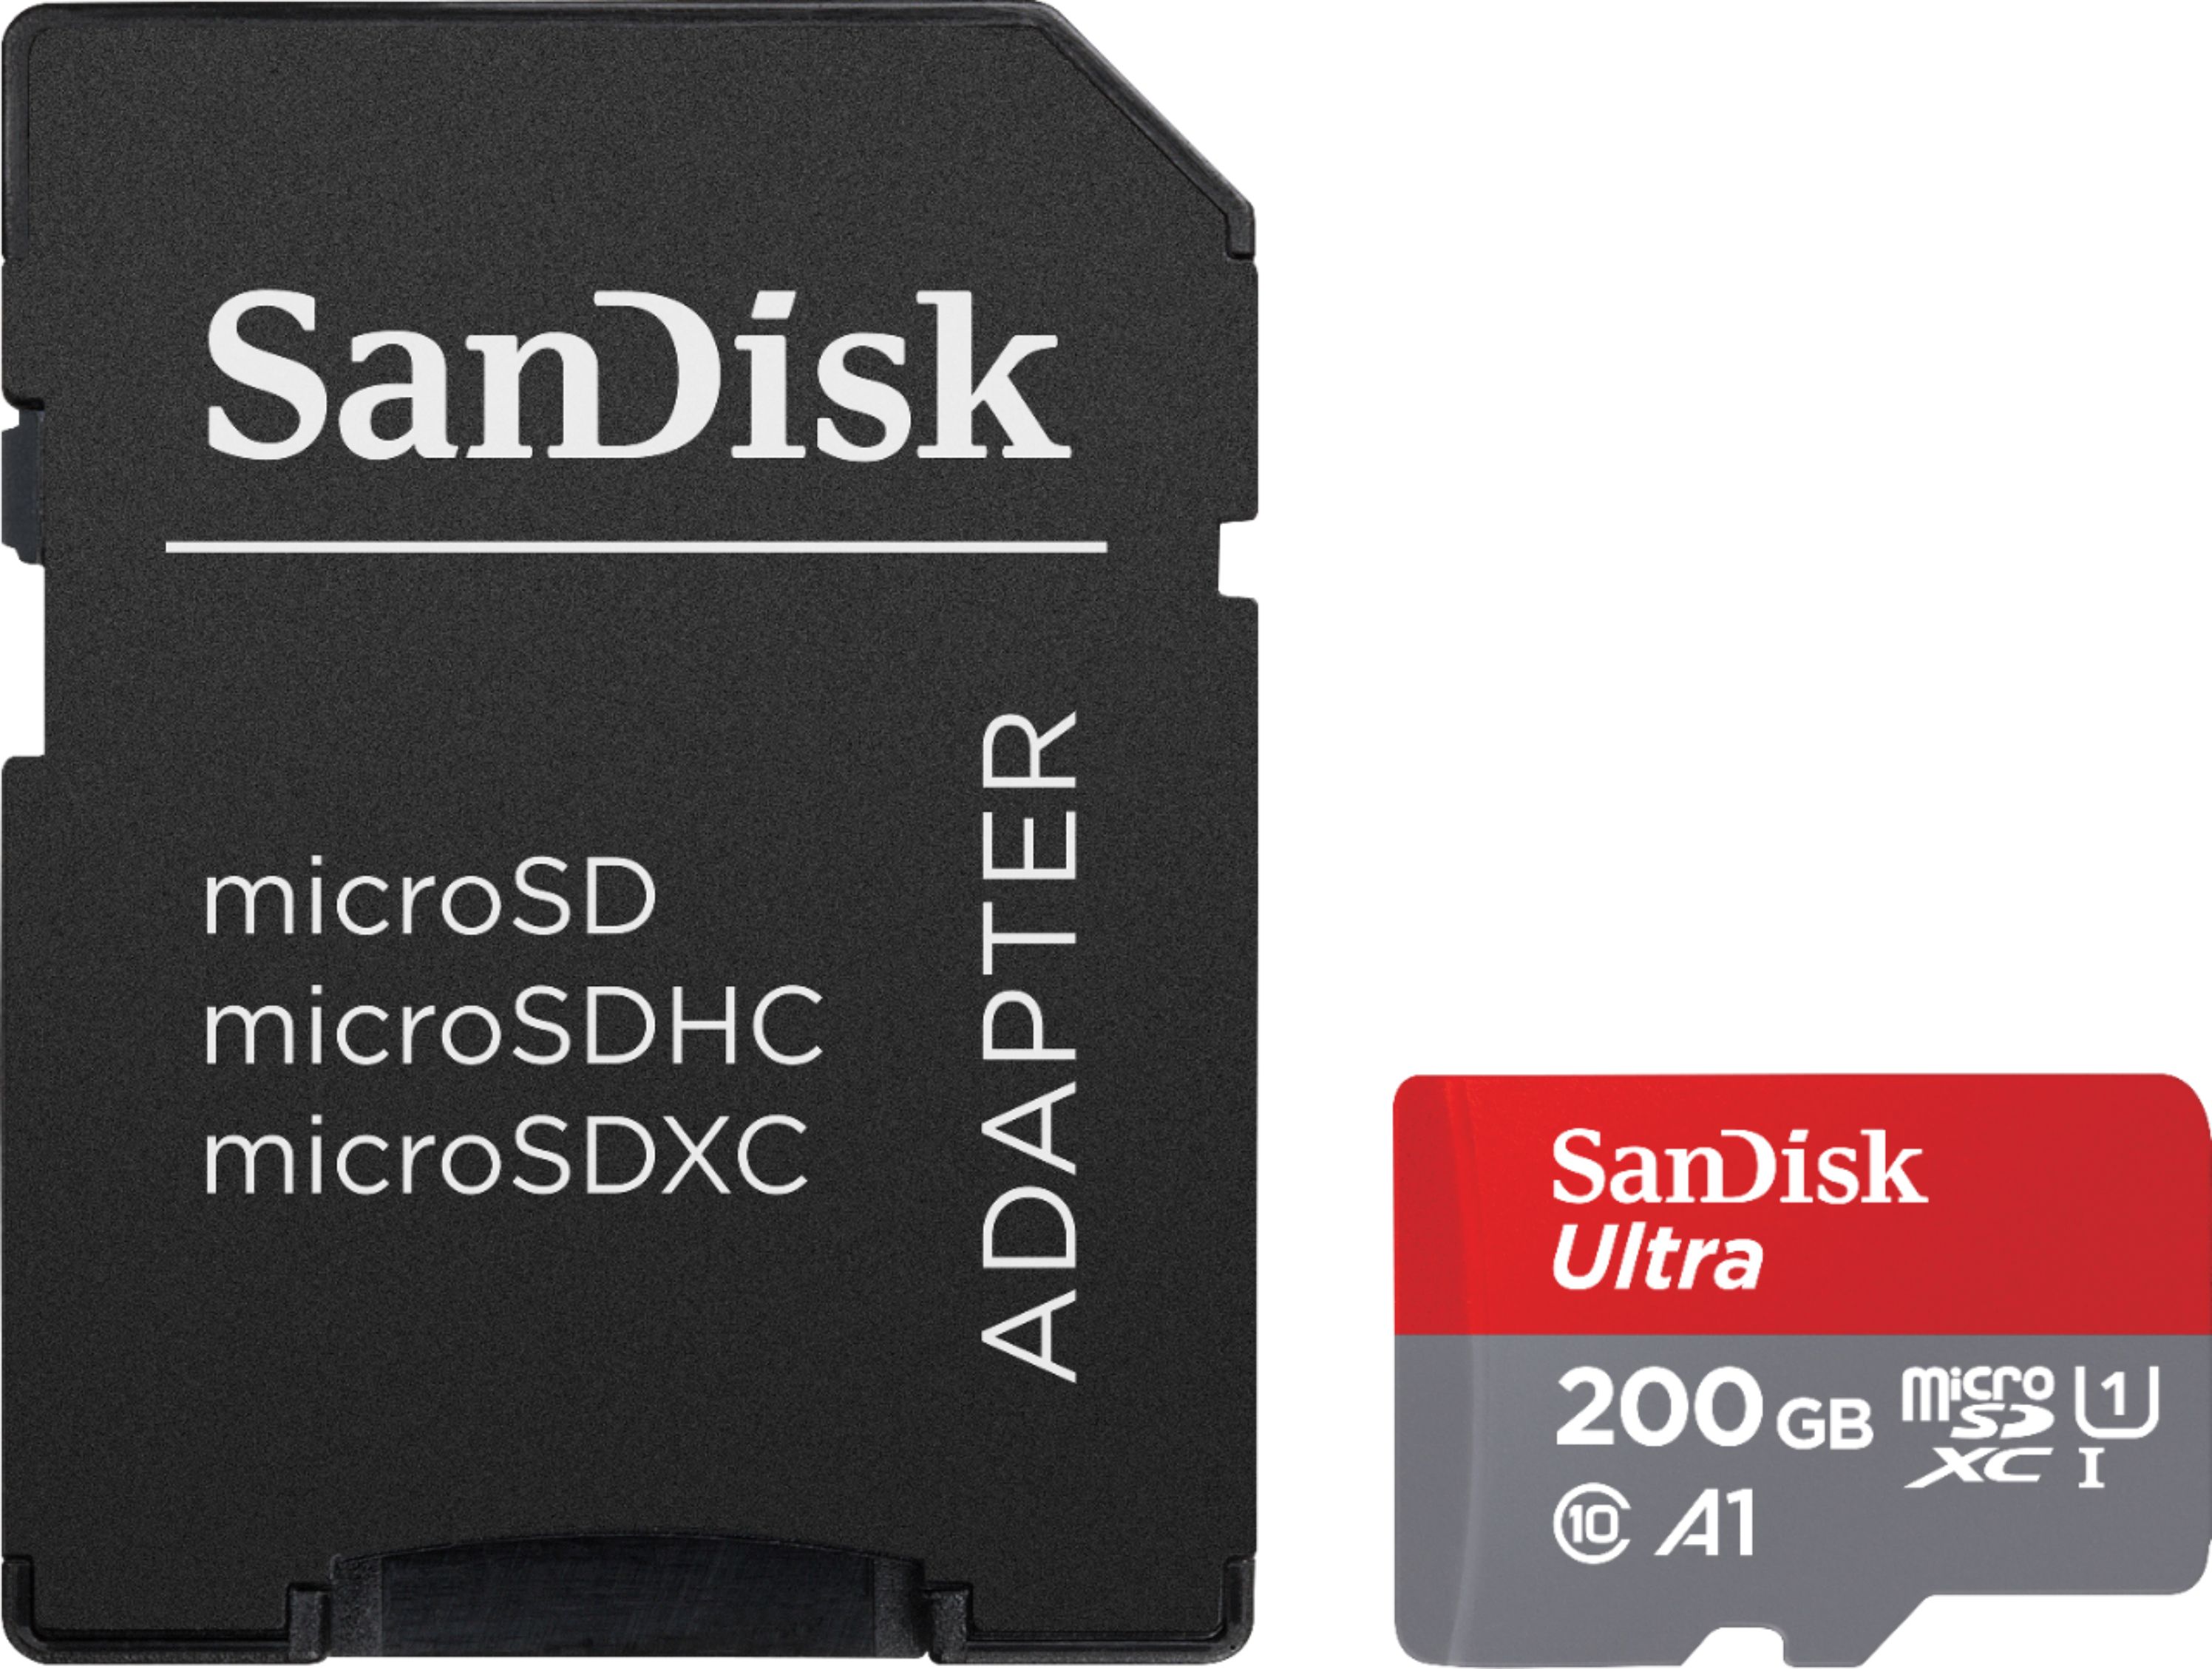 Sandisk Micro Sdhc 16 GB microSDHC Clase 4 Tarjeta de memoria Flash Nuevo Sm